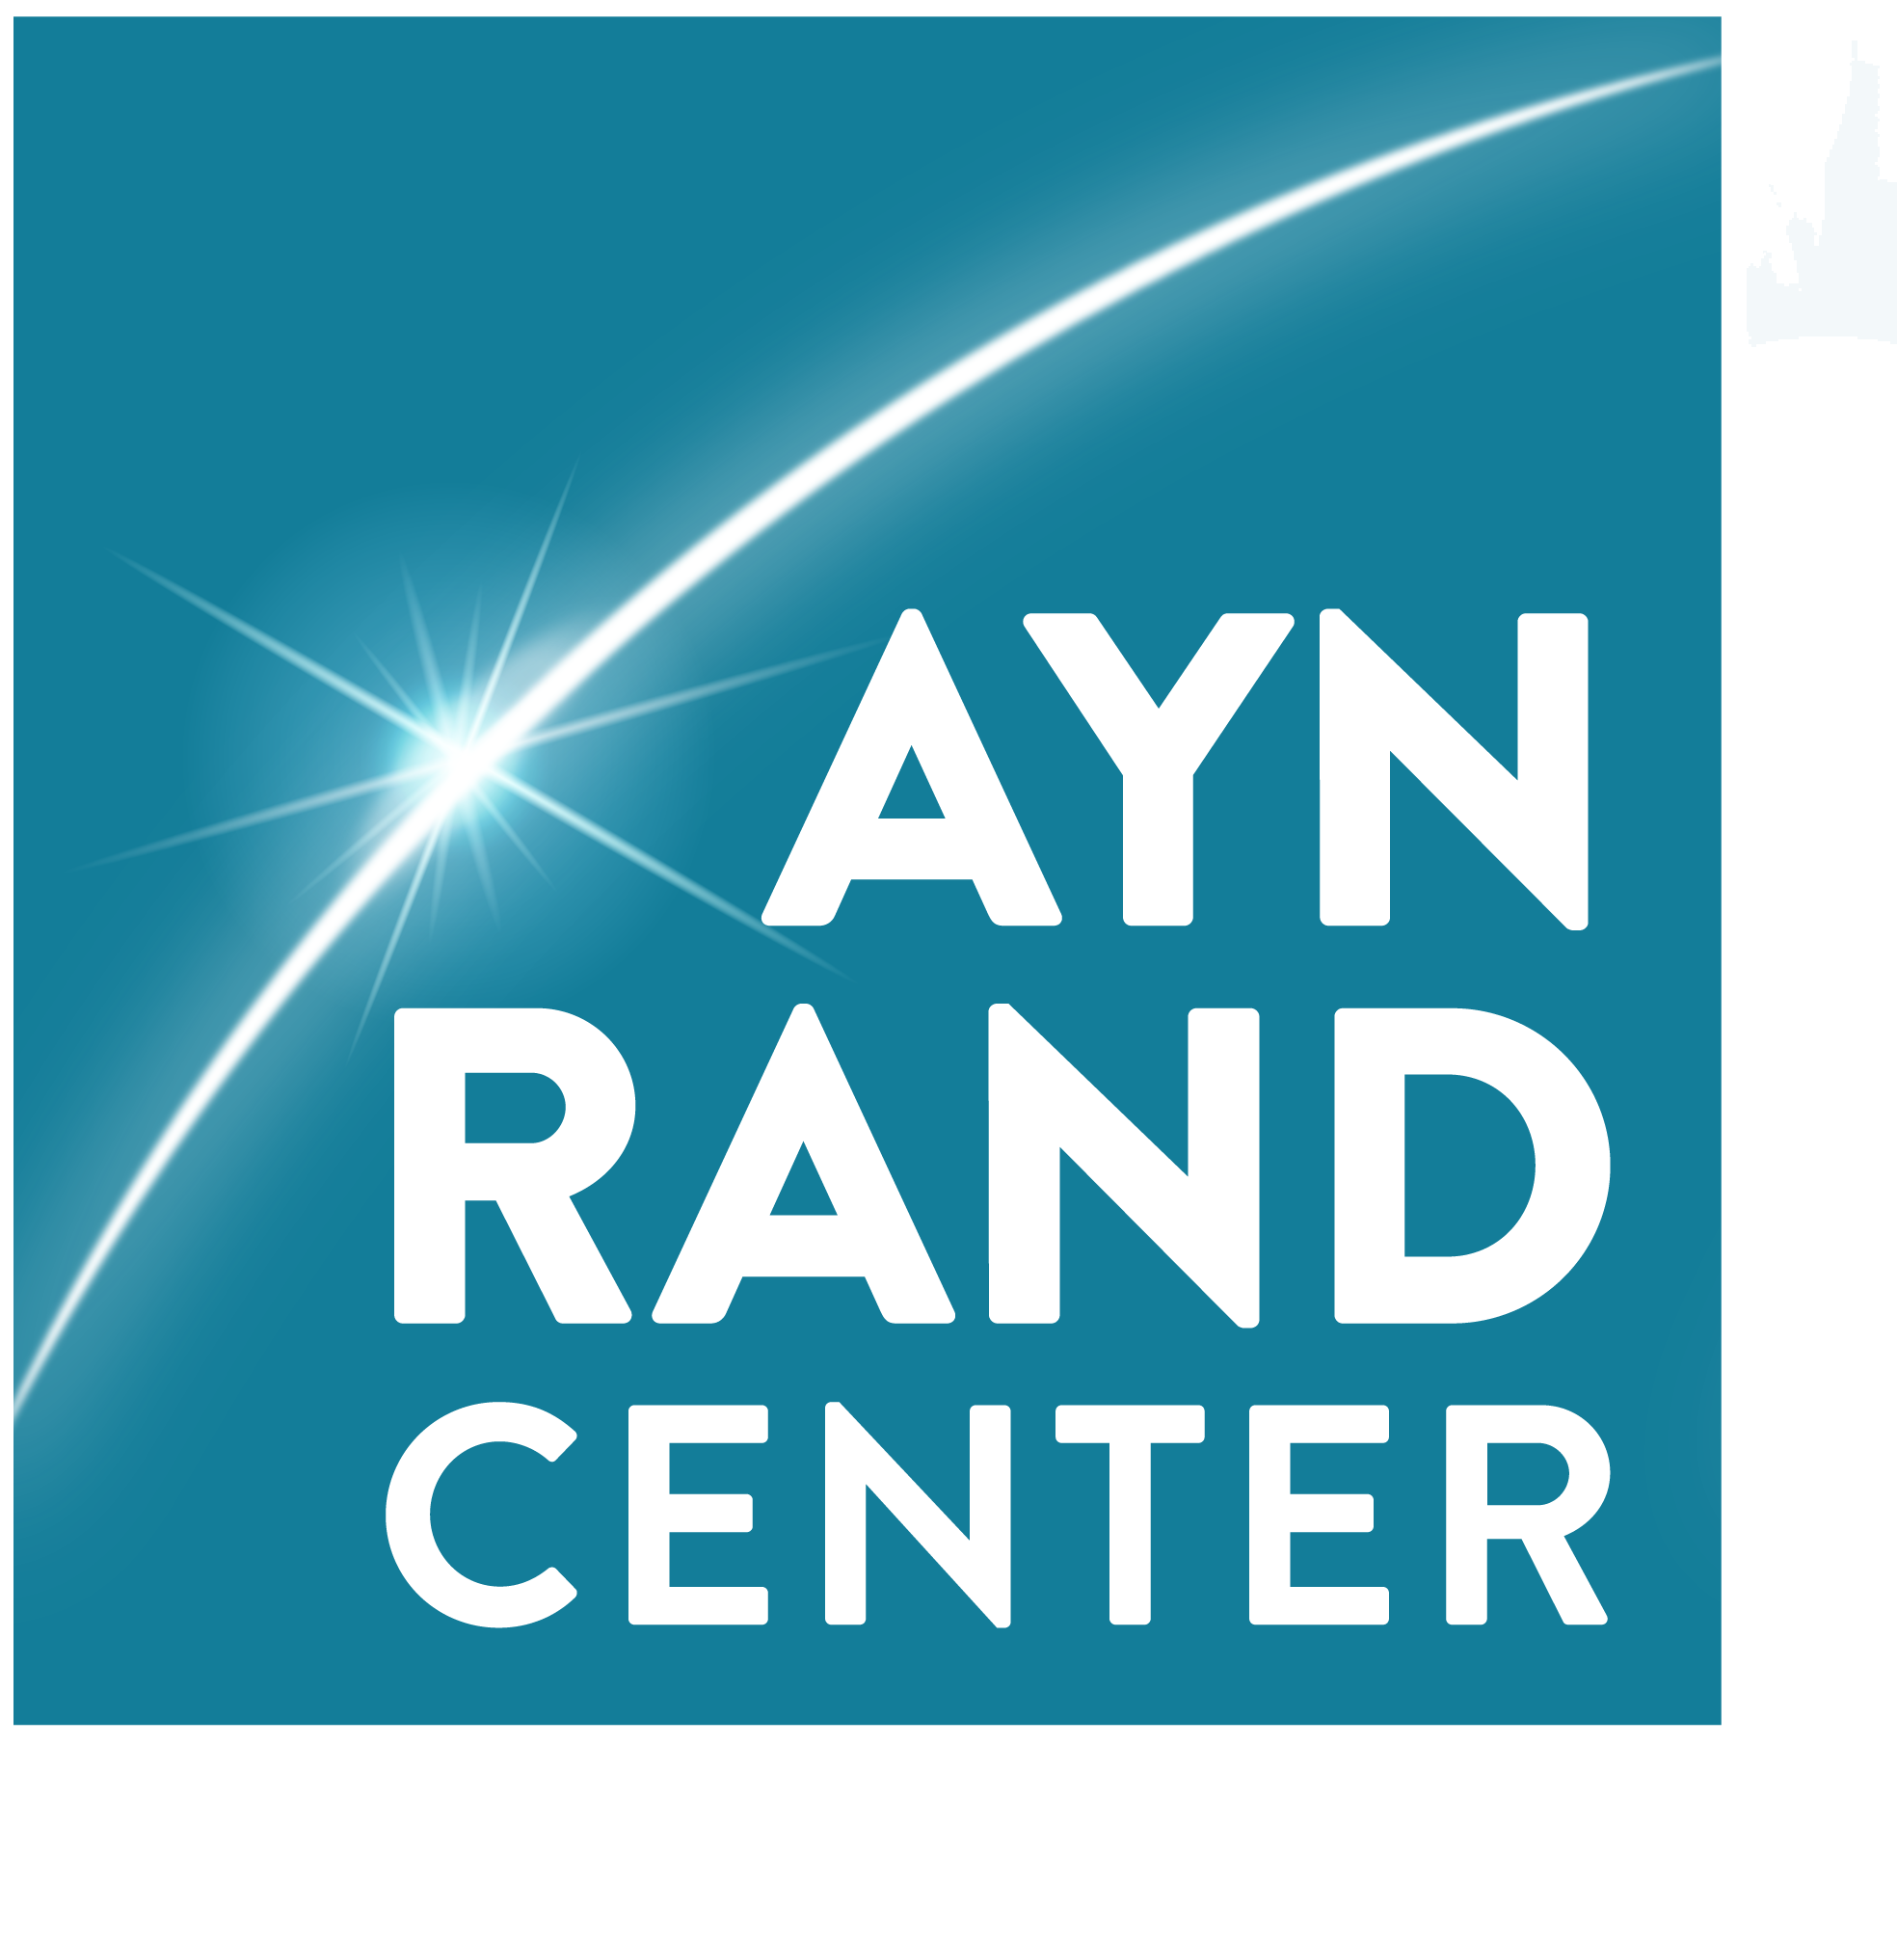 Ayn Rand Center Latin America